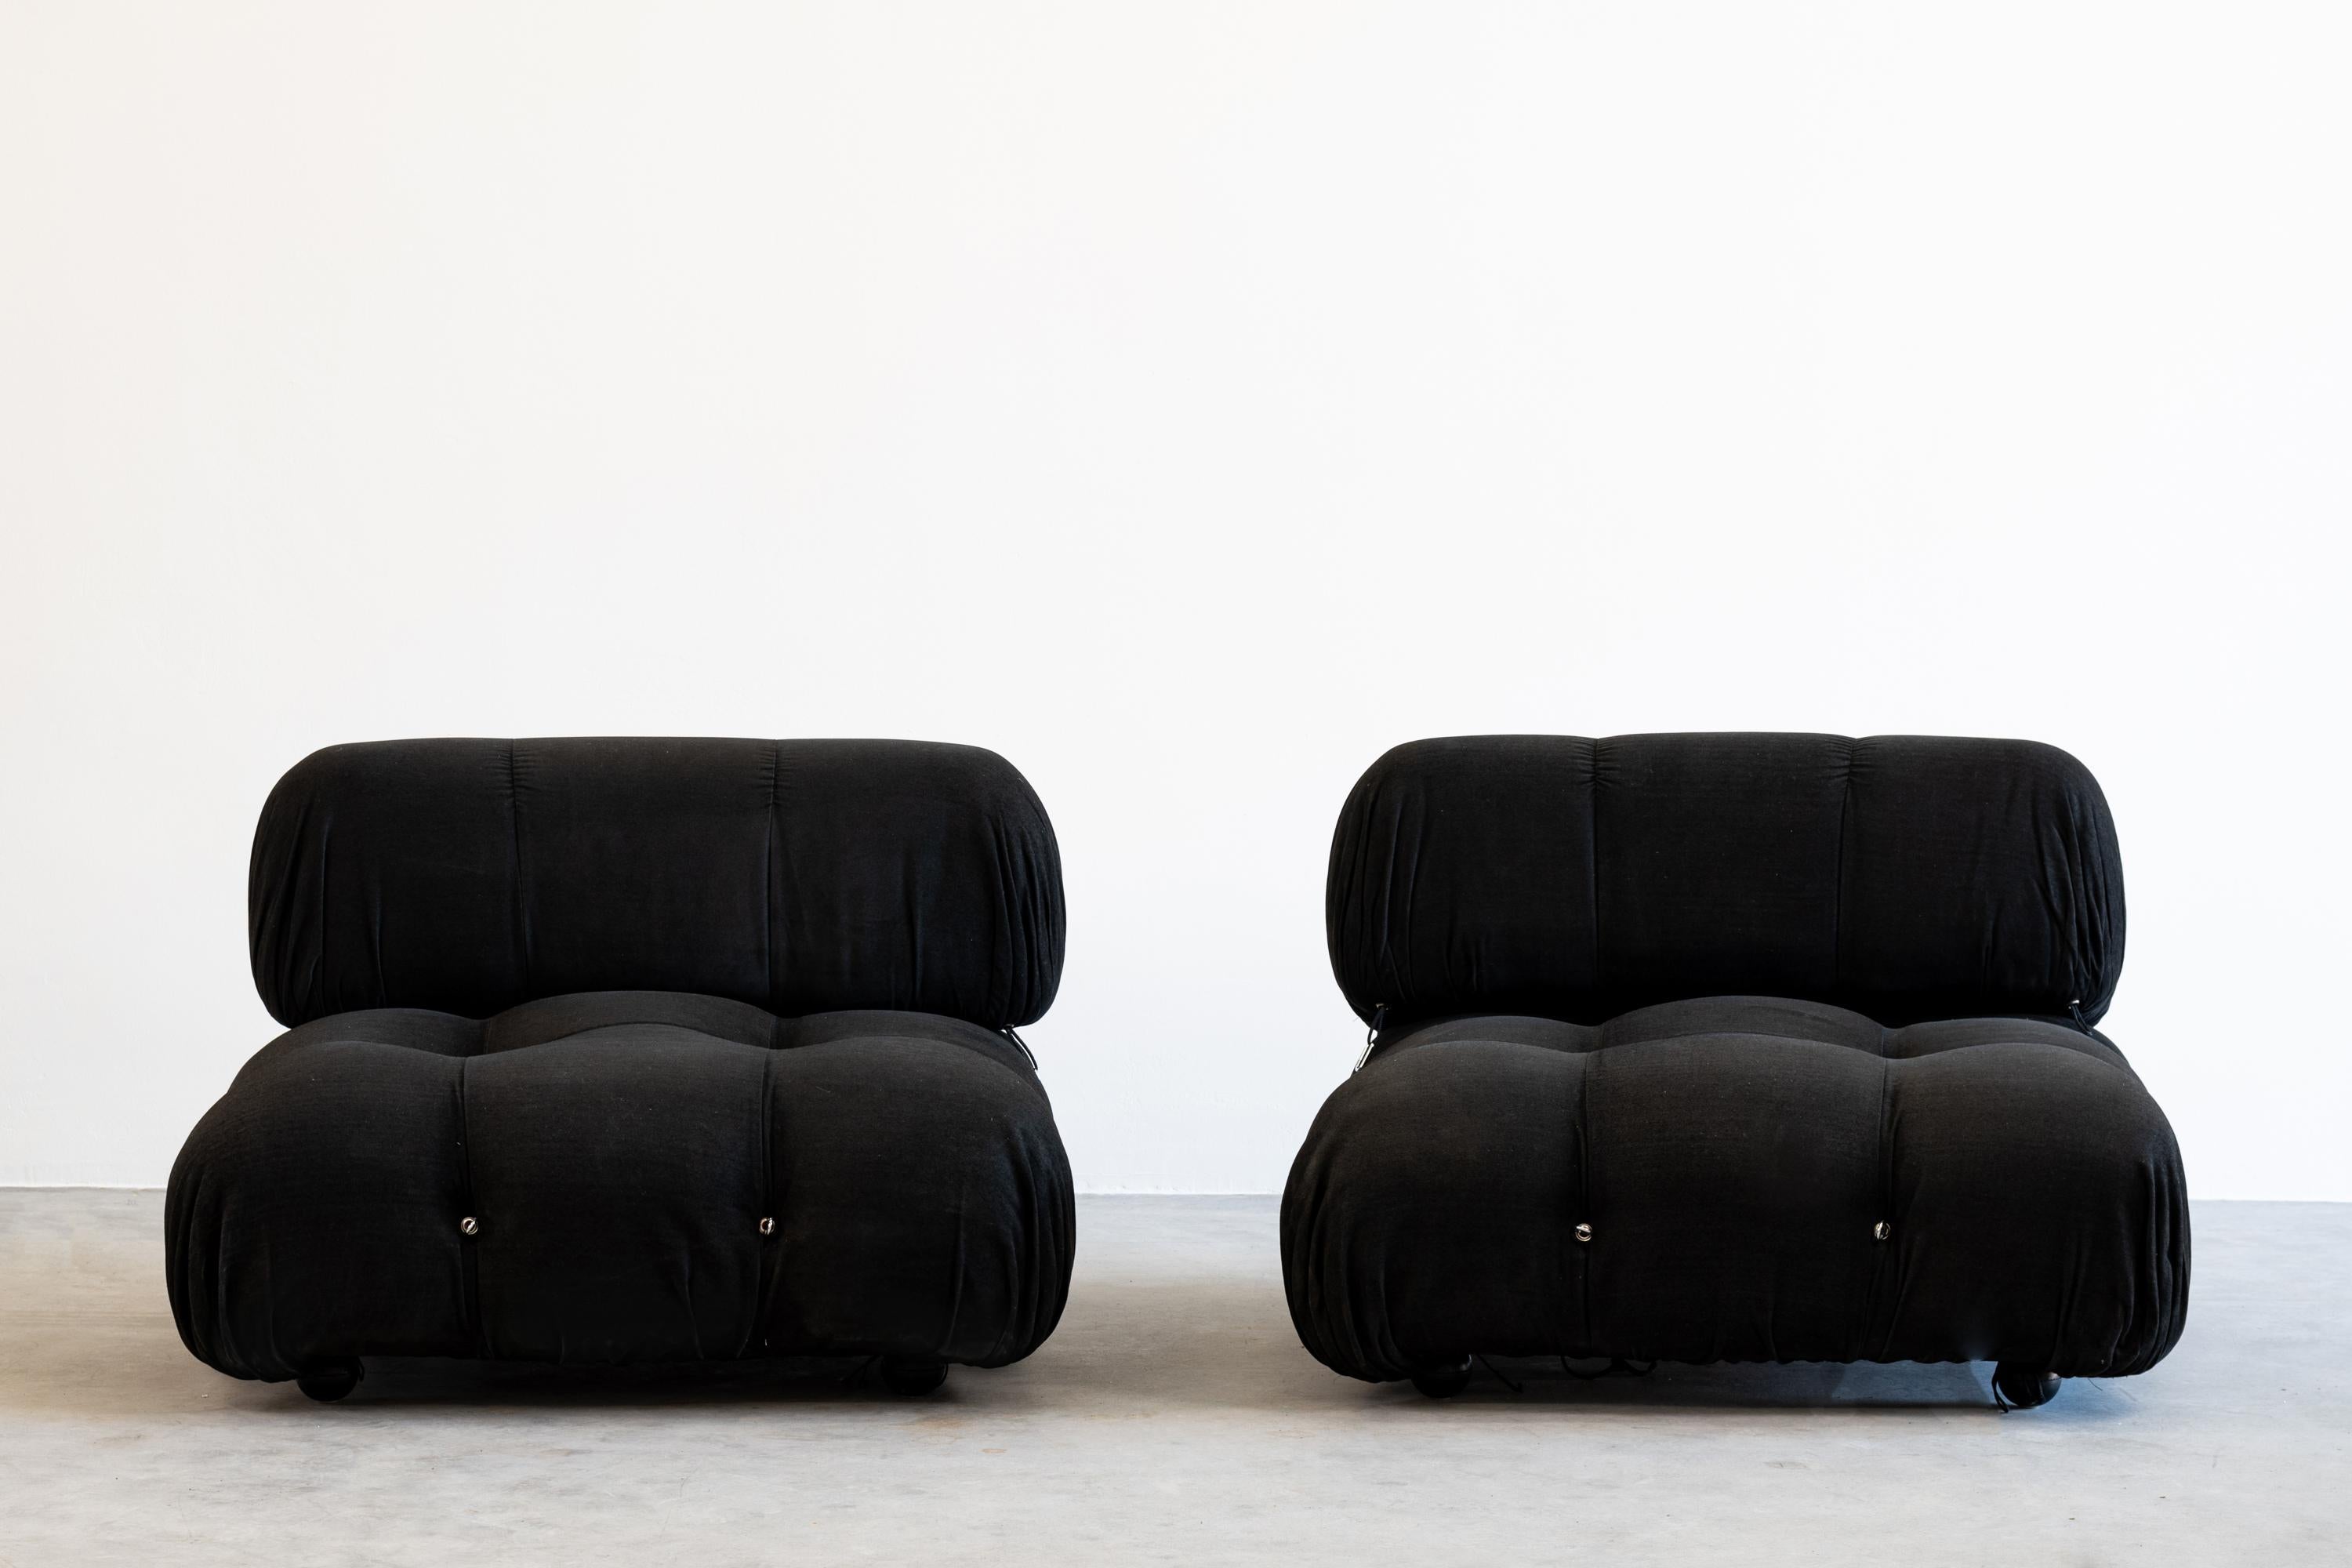 Iconic Camaleonda sofa with two modules. Structure in wood and upholstered in black velvet. Designed by Mario Bellini for B&B, Italy, circa 1970.
Measurements: Single module 95 x 95 x 70 cm.

Literature: G. Gramigna, Repertorio del design